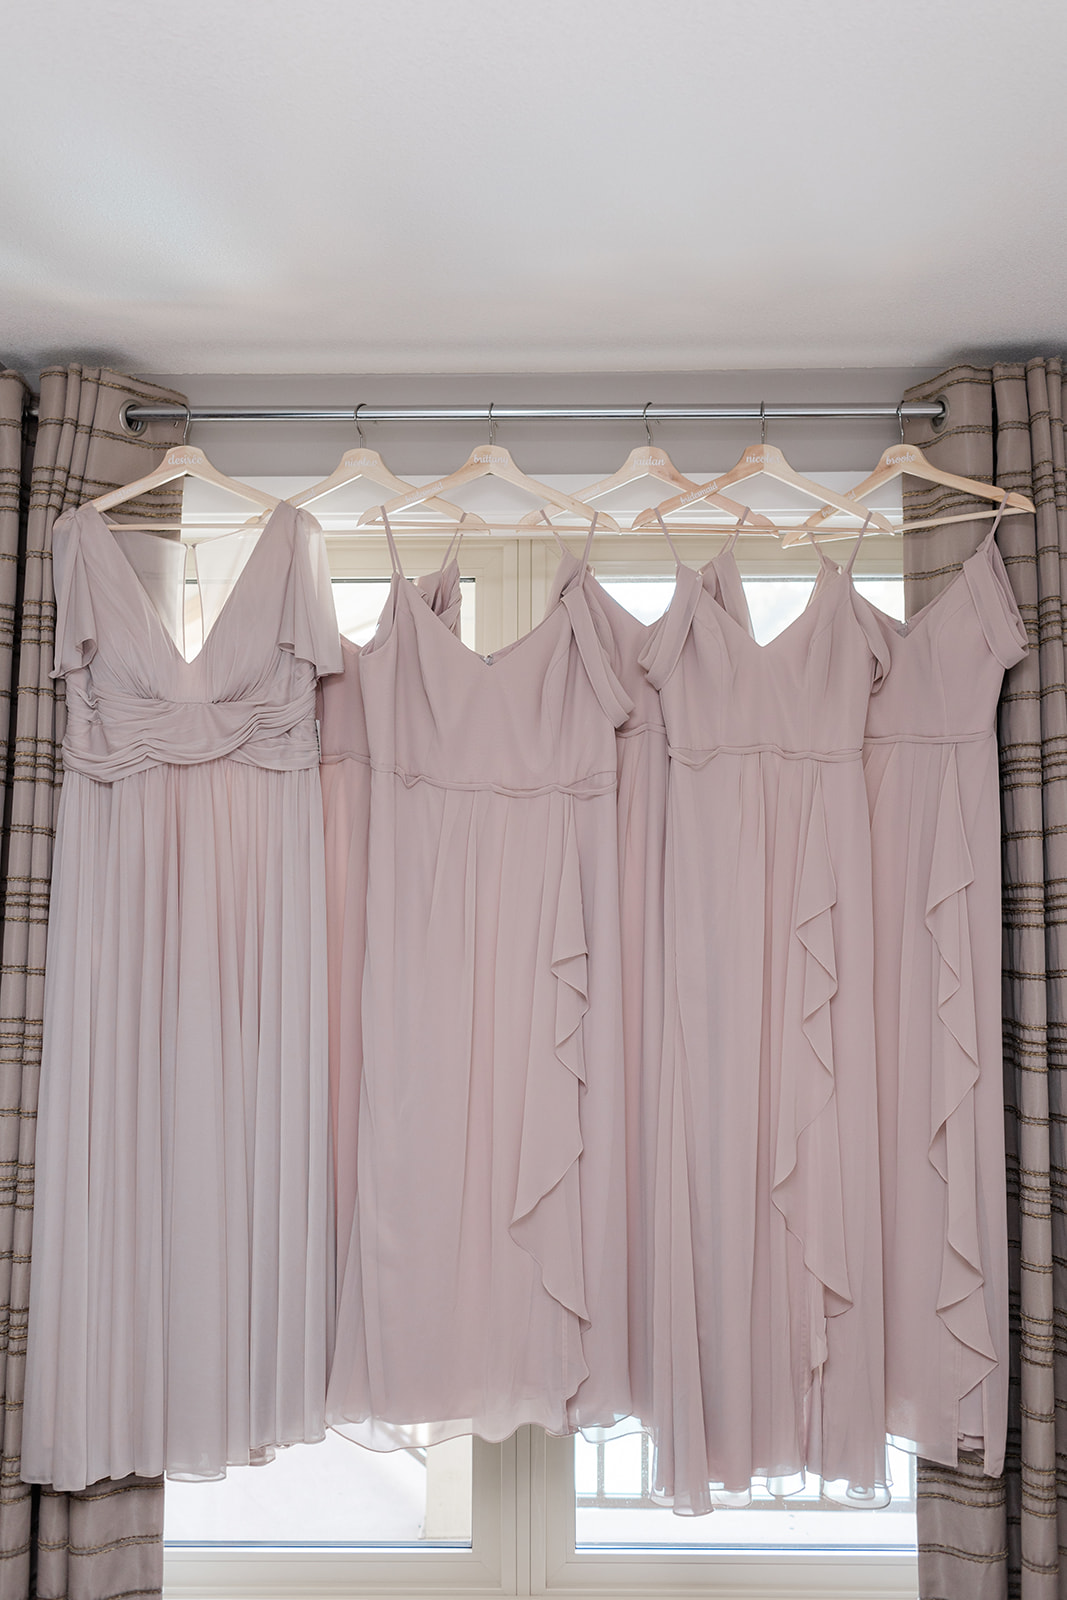 bridesmaids dresses hanging in window